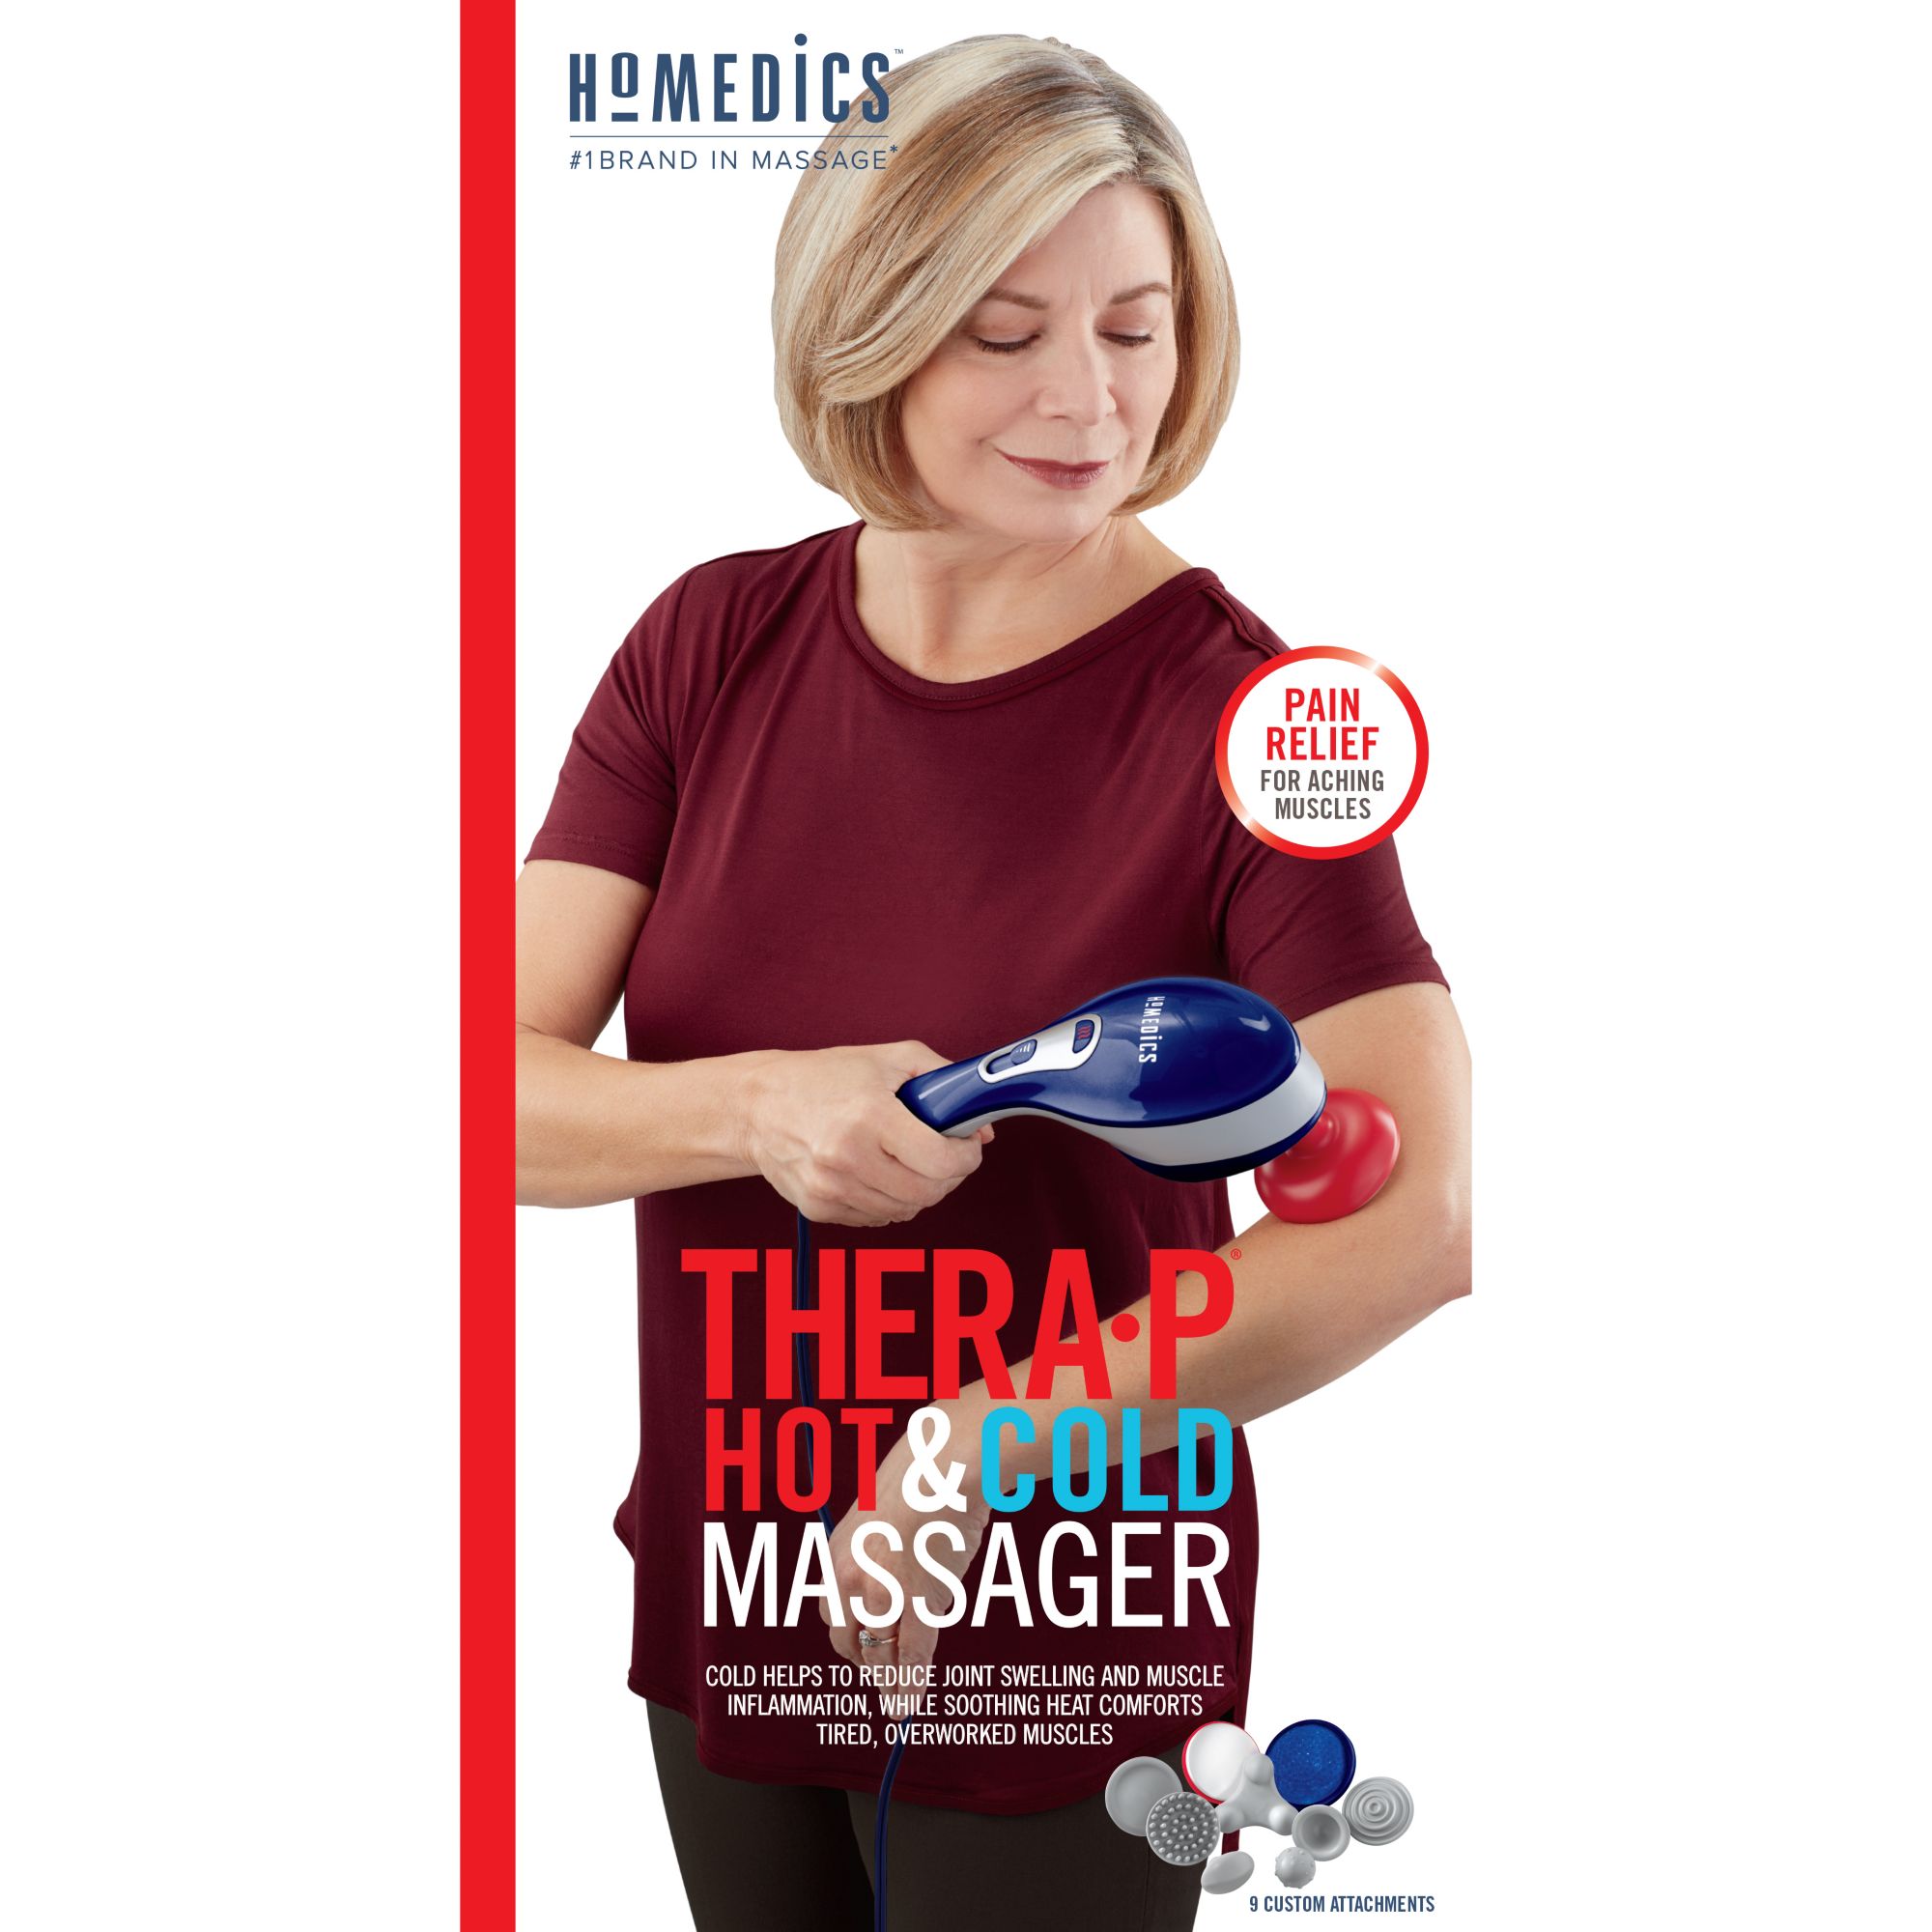 Homedics Heated Vibration Neck Massager, Multi Speed 